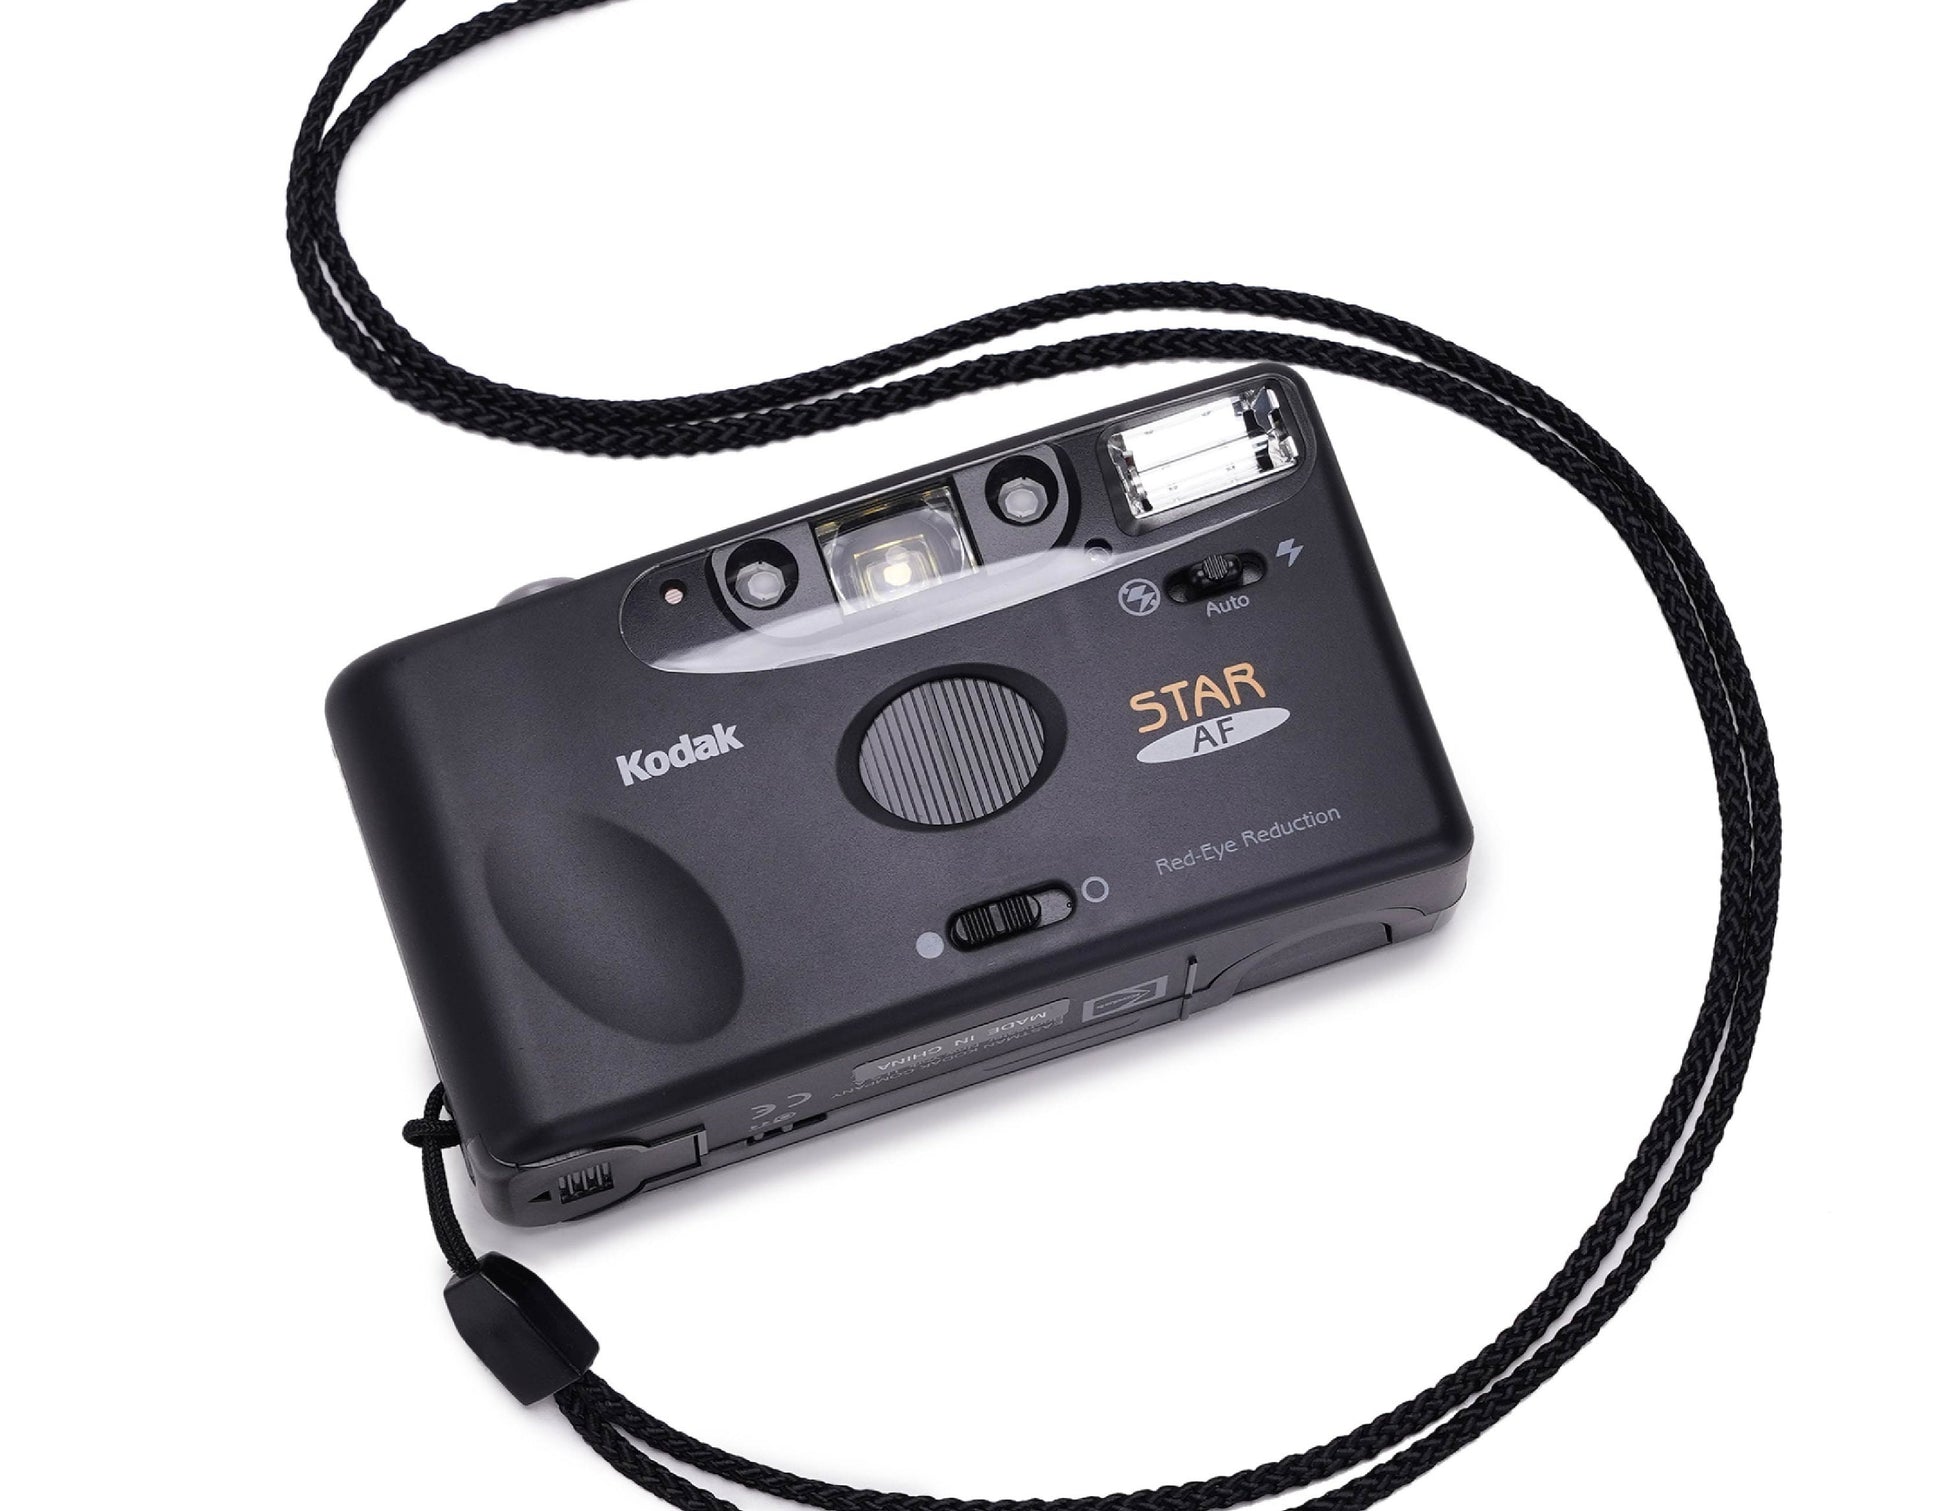 Kodak Instant Camera, Kodak Star AF, Fully Tested and Perfectly Working, Kodak, Vintage camera - Vintage Polaroid Instant Cameras